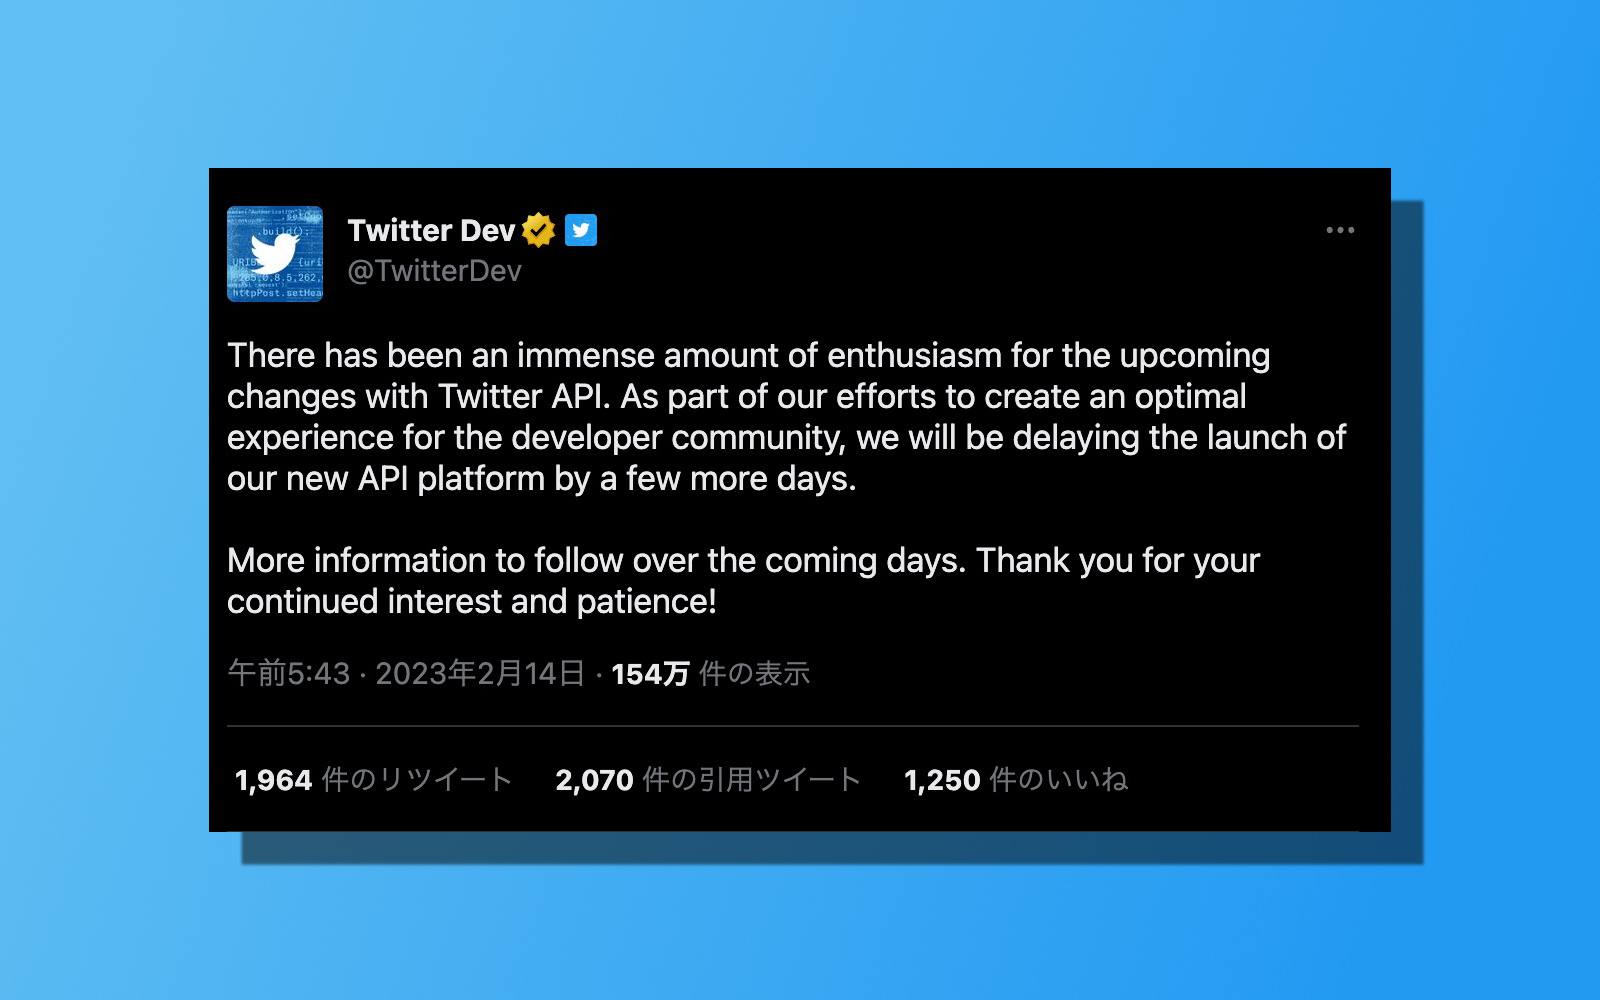 Twitter delays new api launch